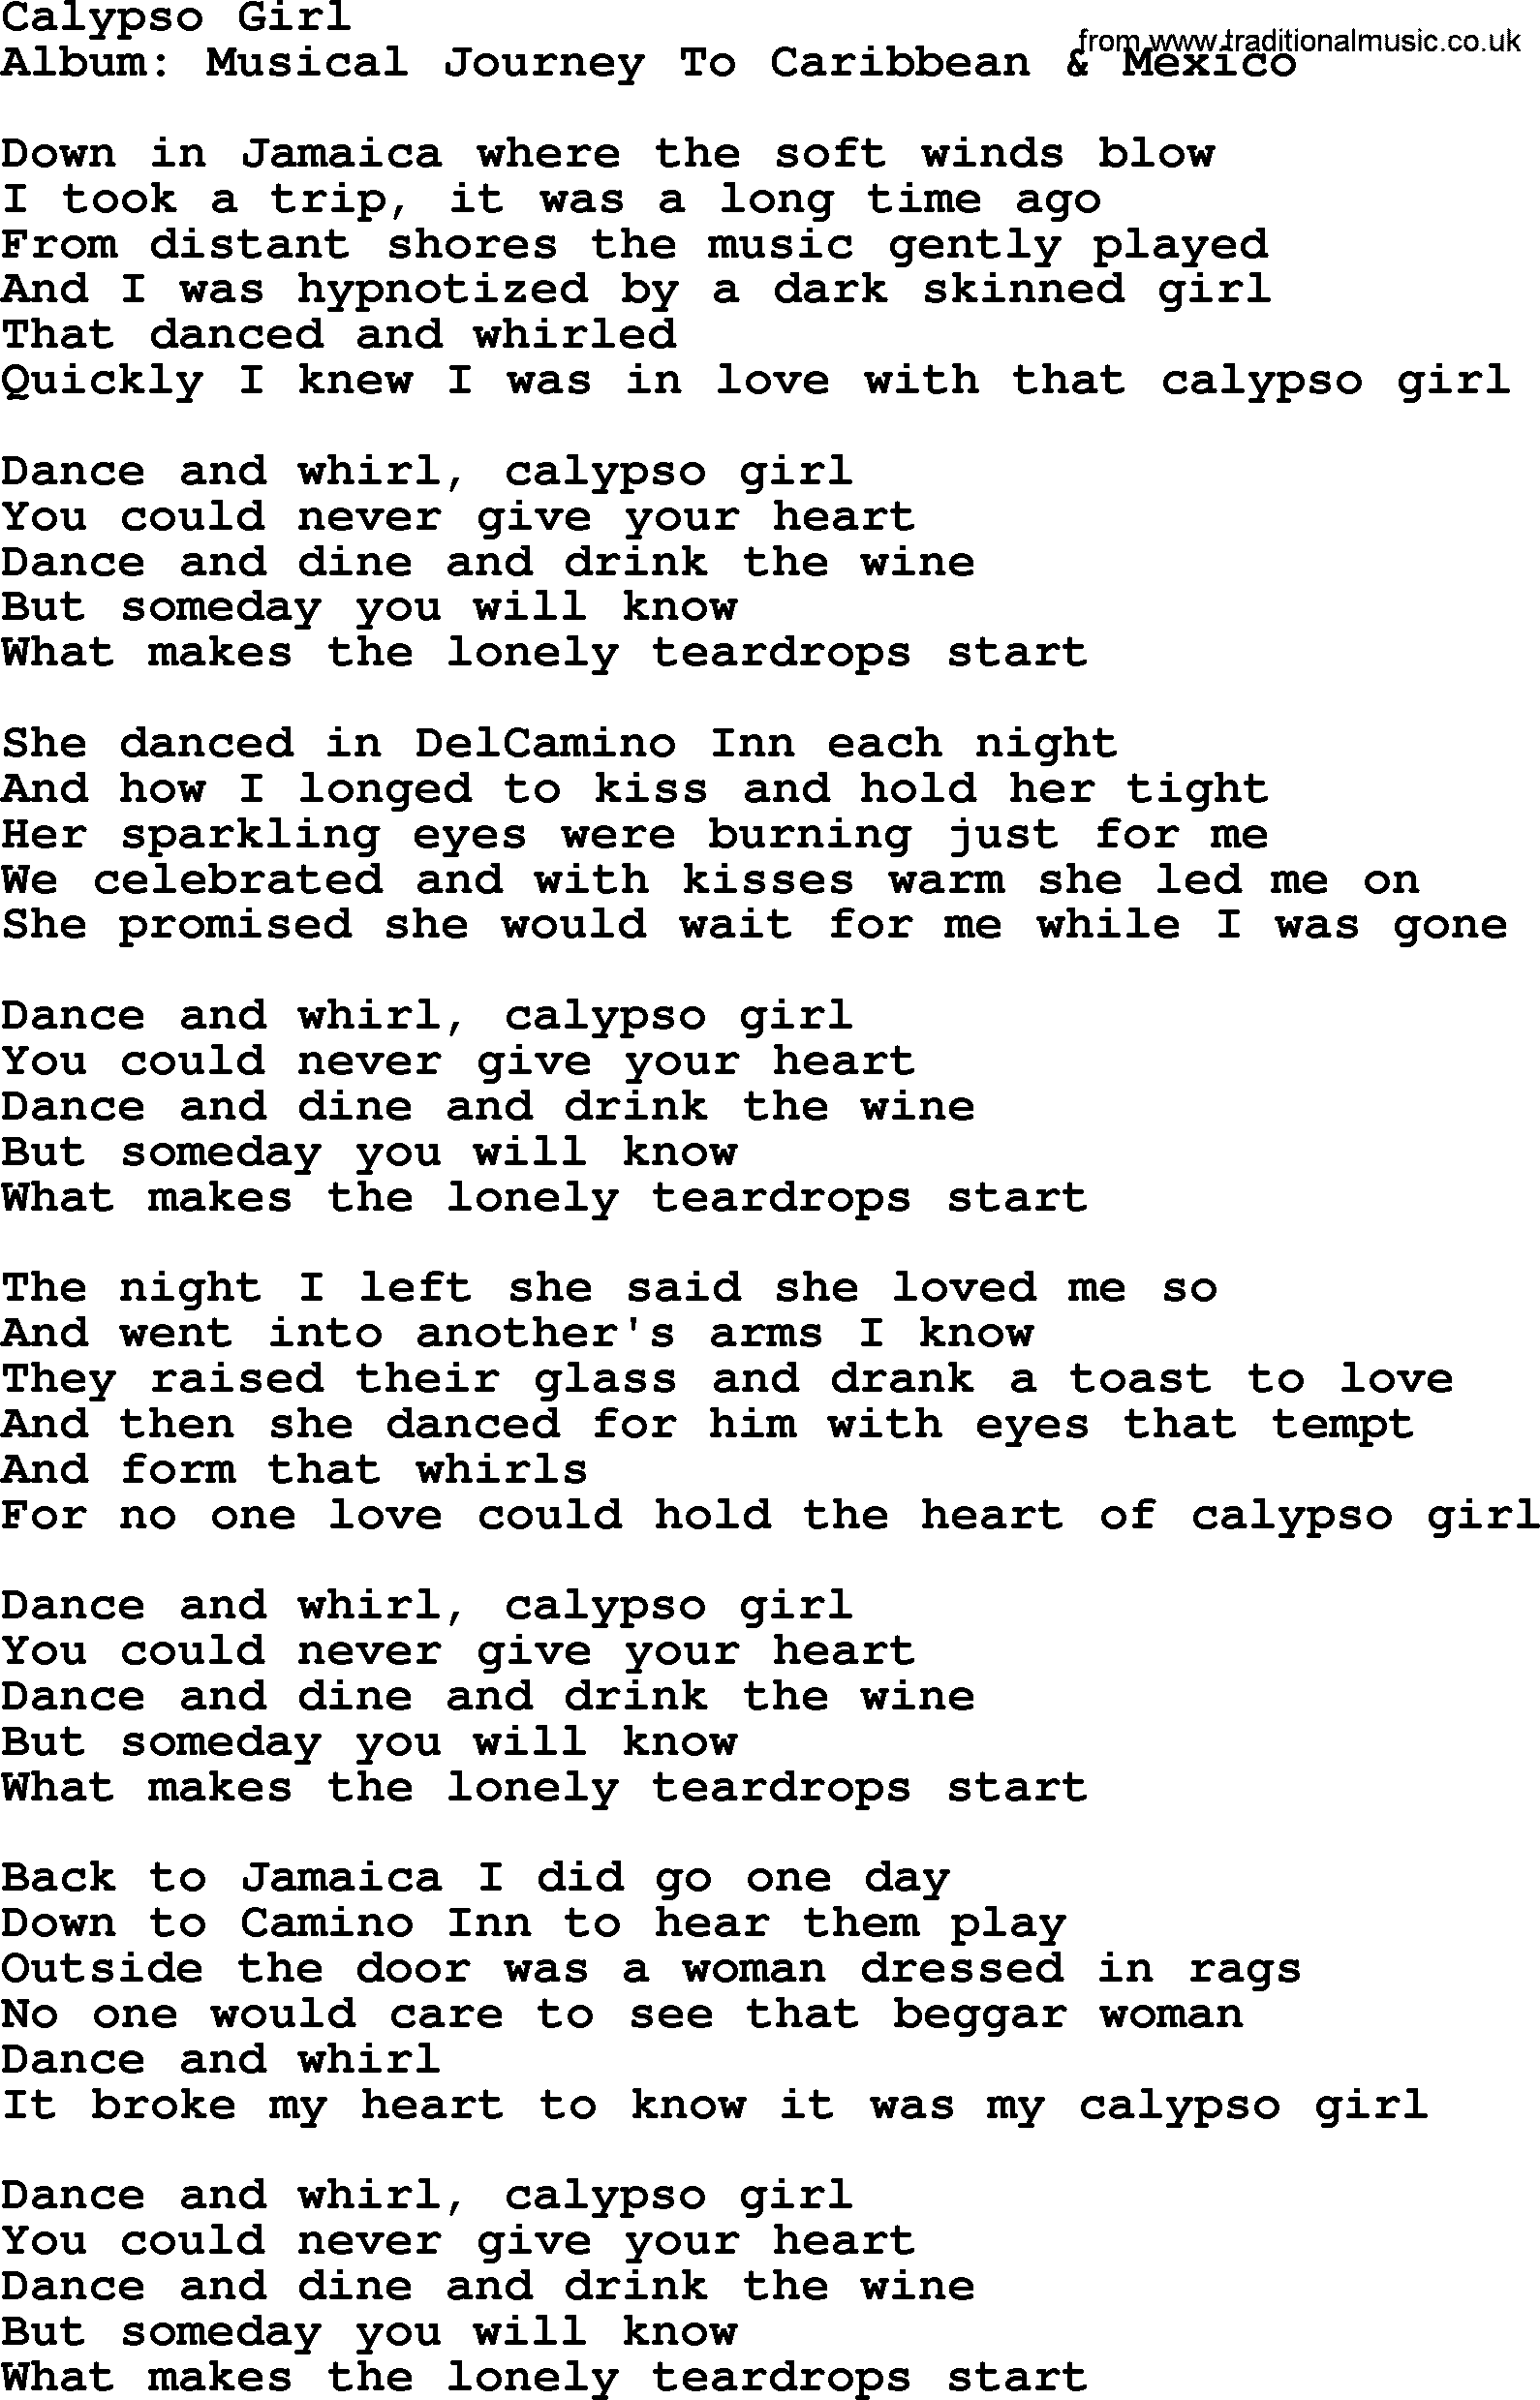 Marty Robbins song: Calypso Girl, lyrics